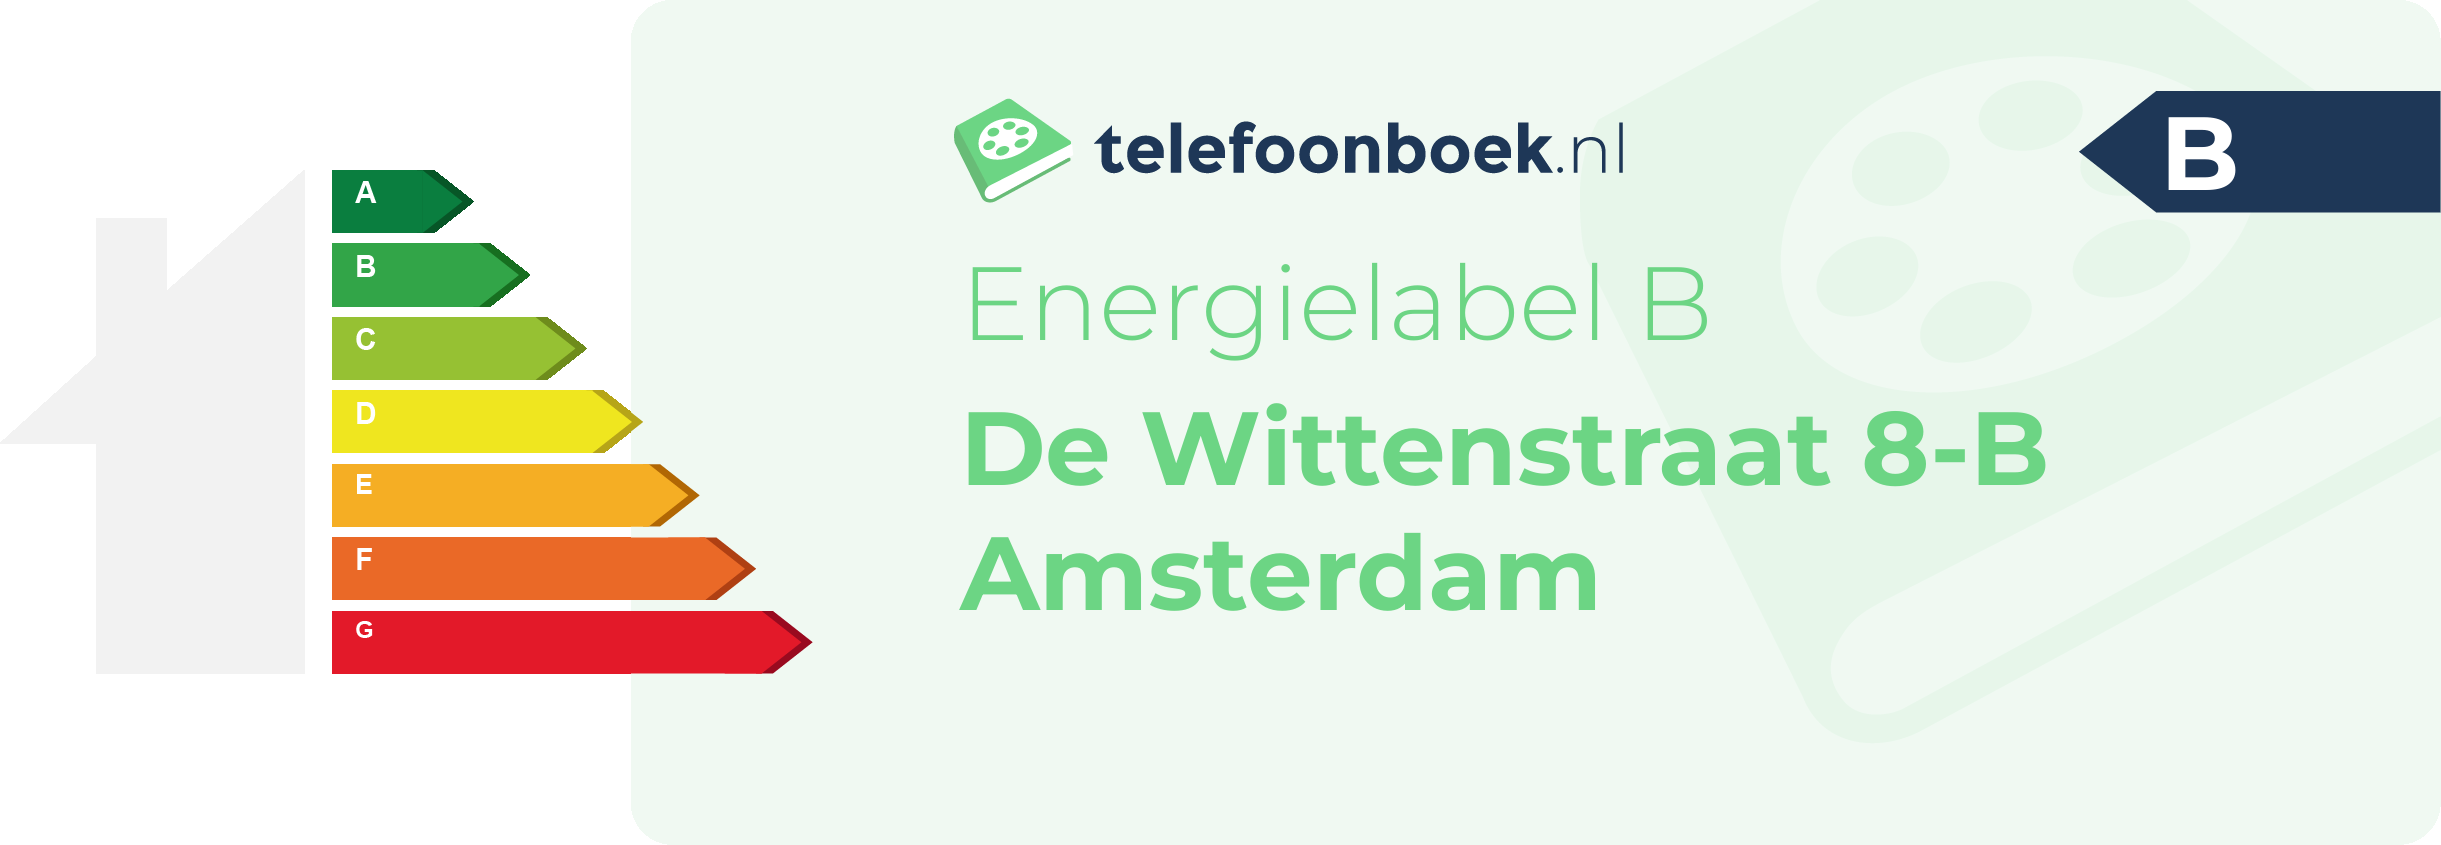 Energielabel De Wittenstraat 8-B Amsterdam